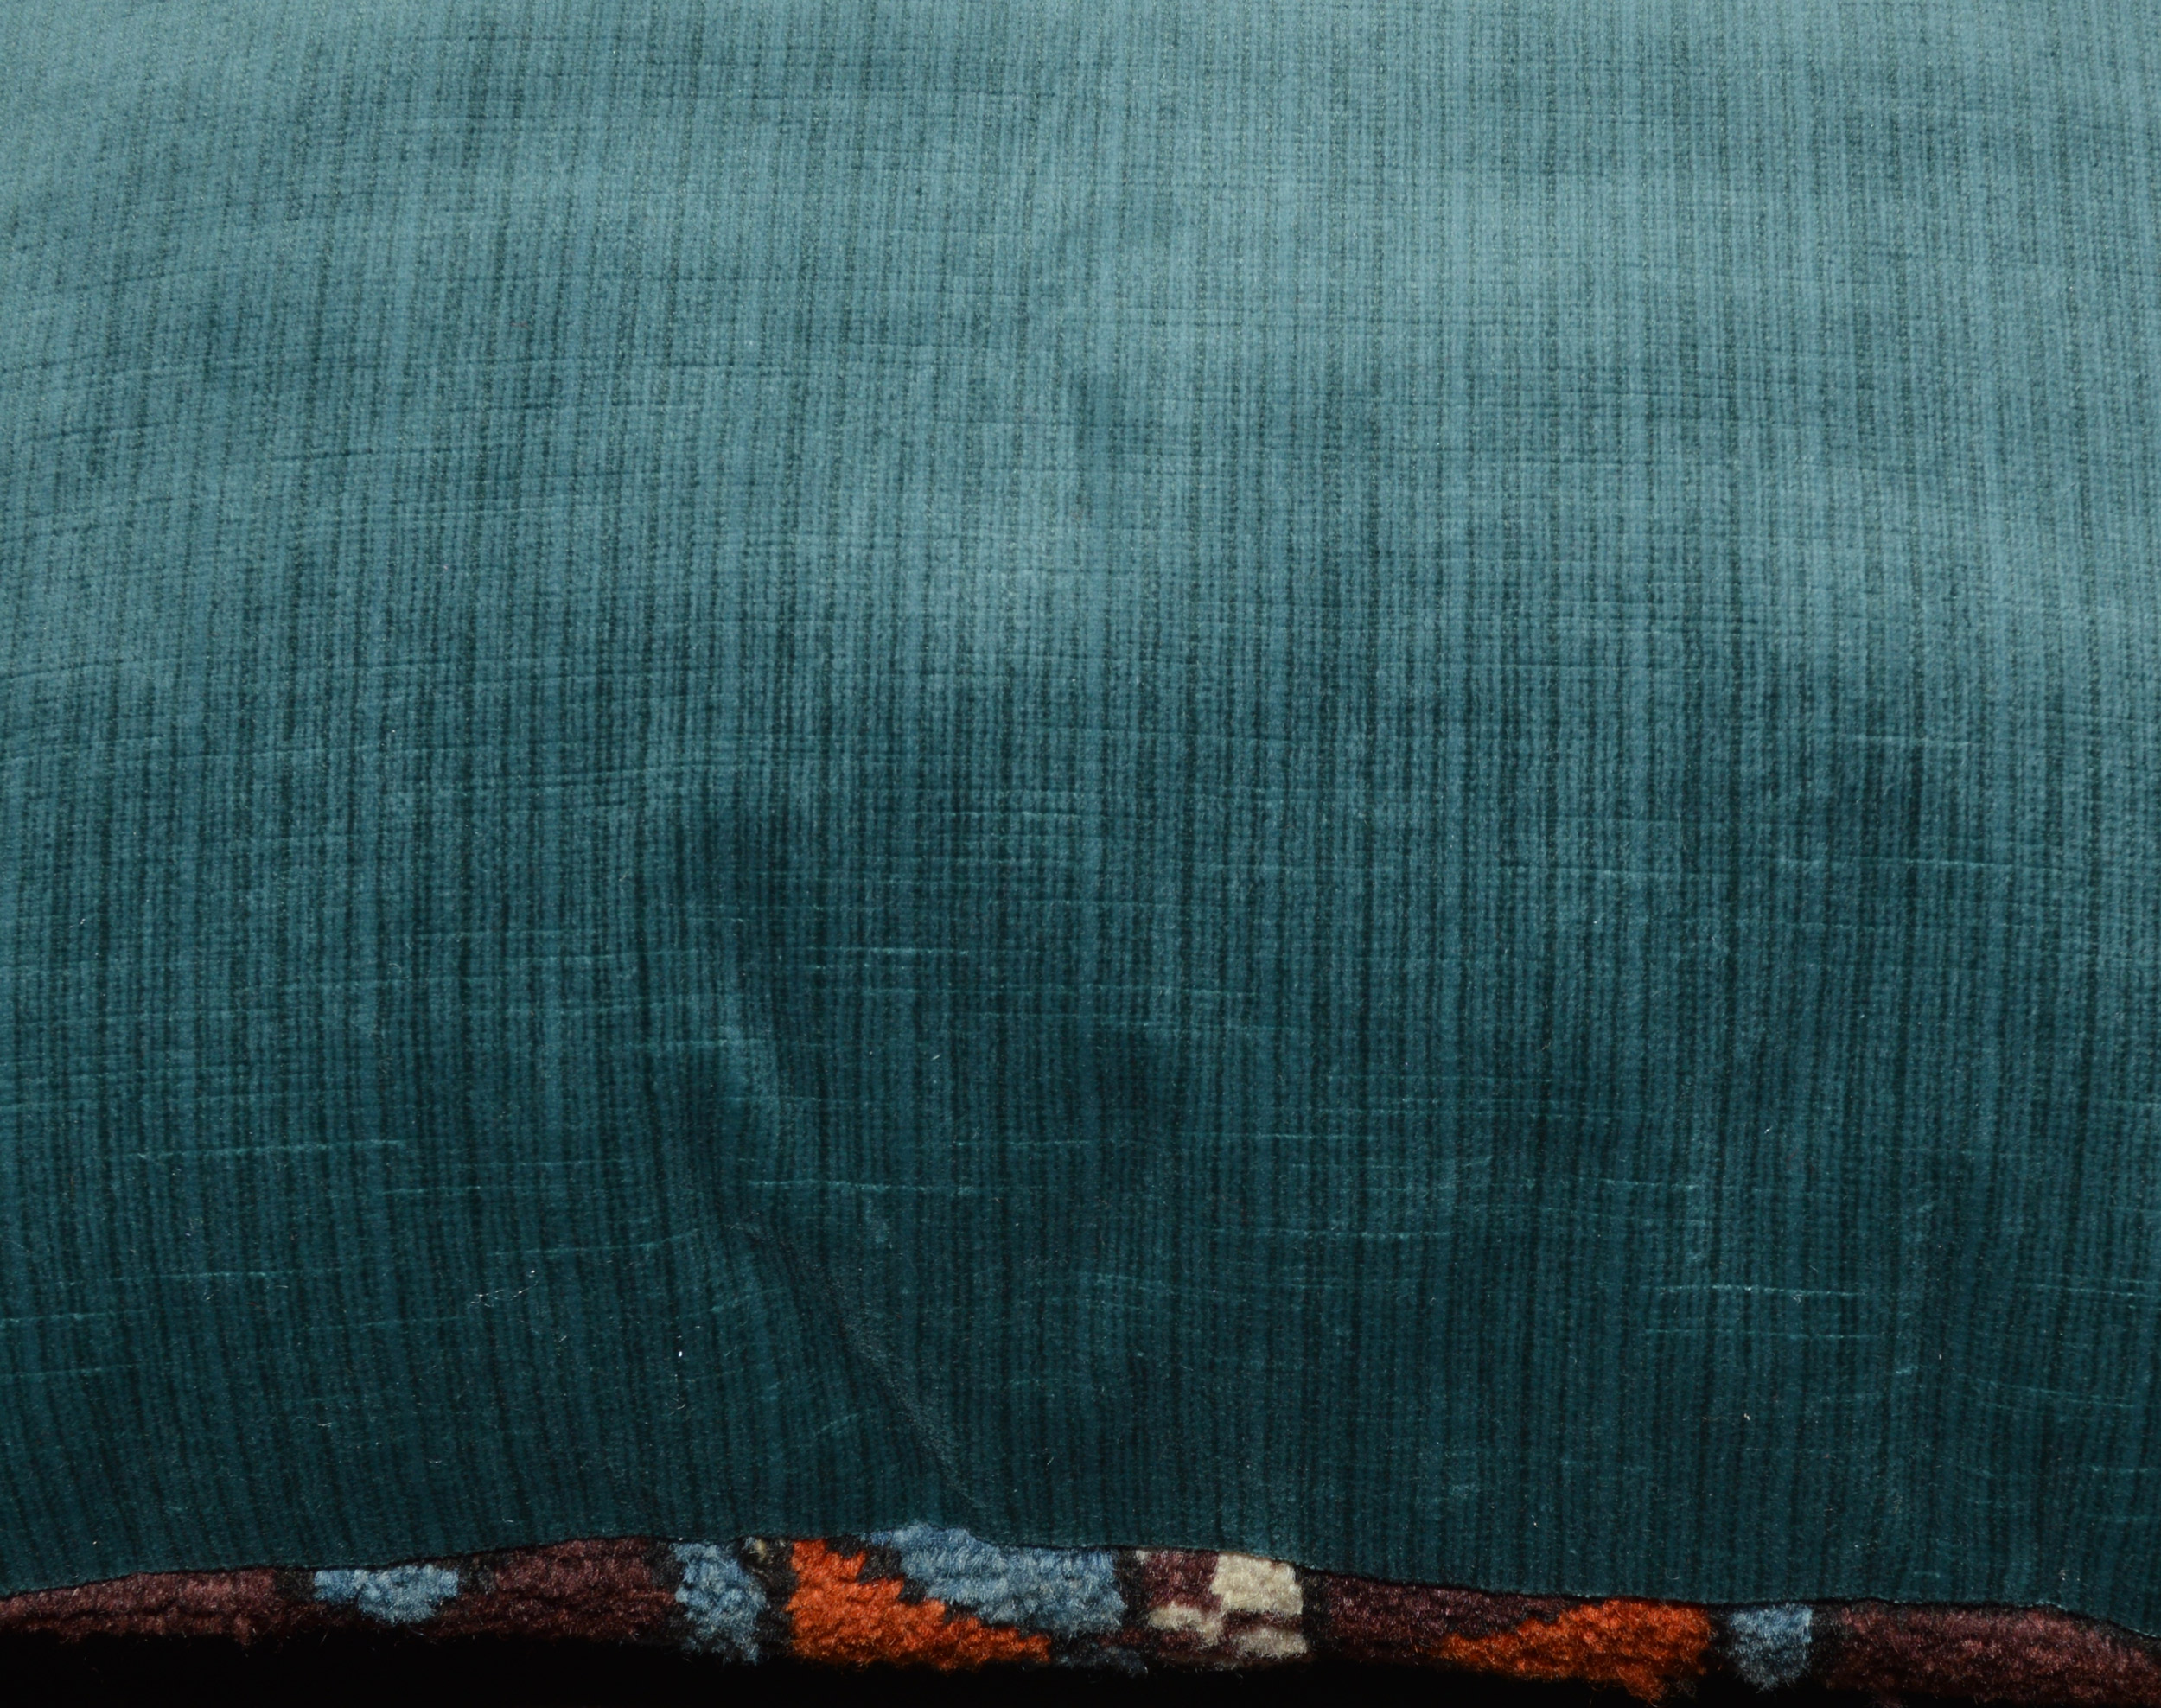 Blue velvet backing from an antique Turkish rug fragment pillow, Douglas Stock Gallery, antique rug pillow Boston,MA area, antique rug pillows New England